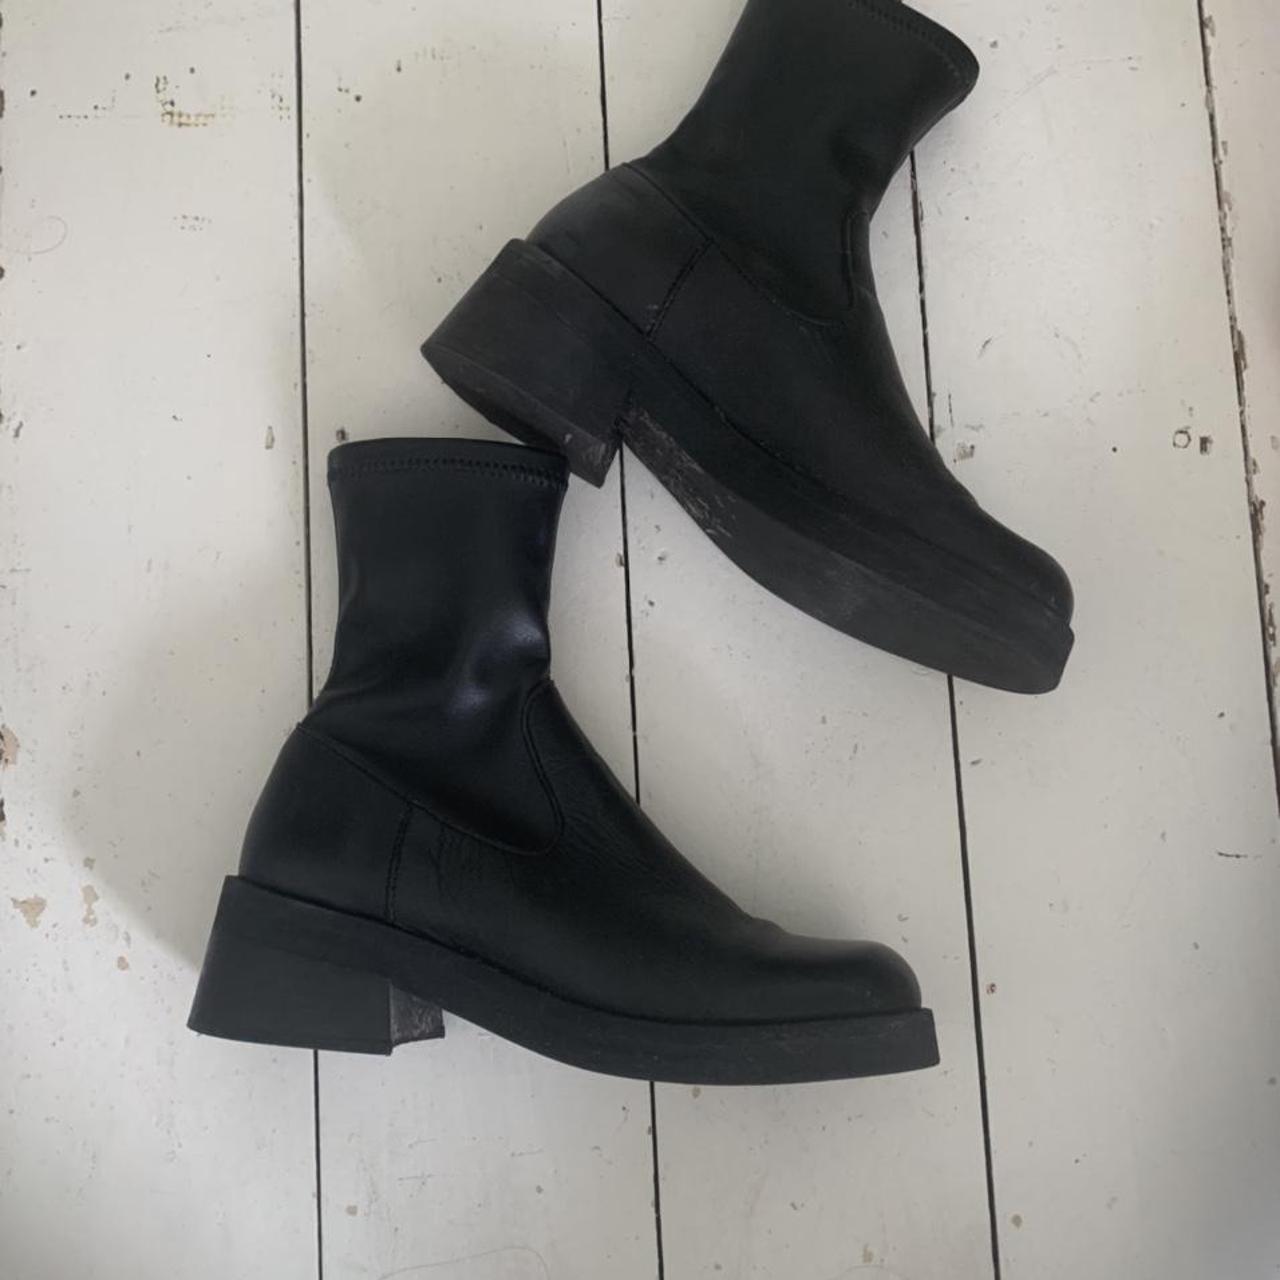 E8 MIISTA boots, black leather sock boots, UK size... - Depop